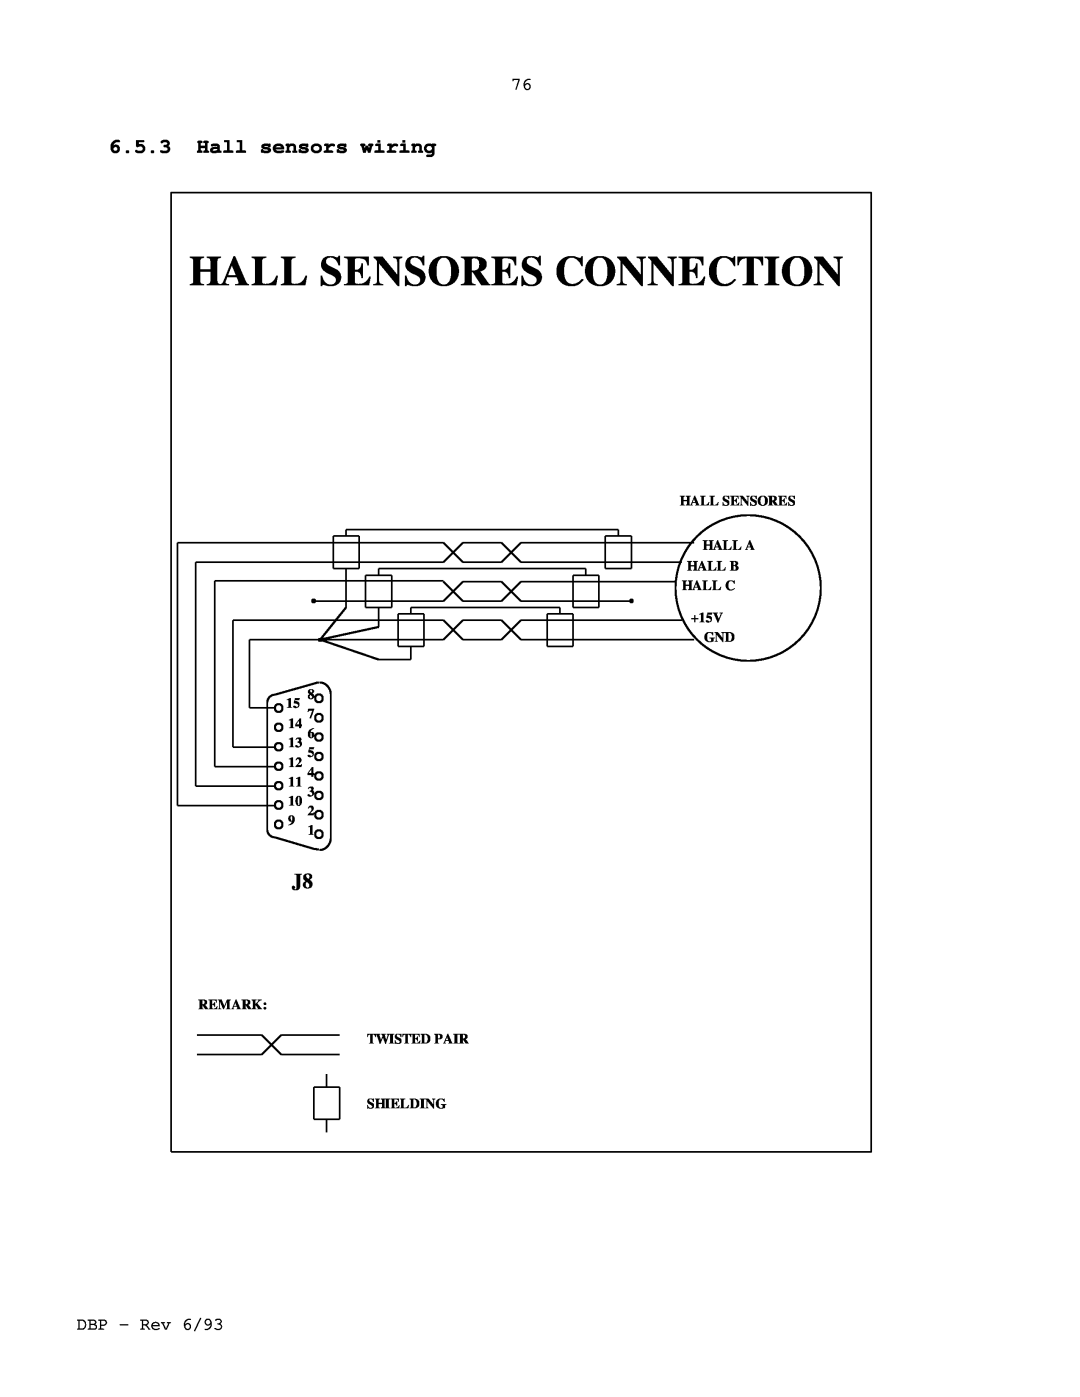 Elmo DBP SERIES manual Hall Sensores Connection, 6.5.3Hall sensors wiring 